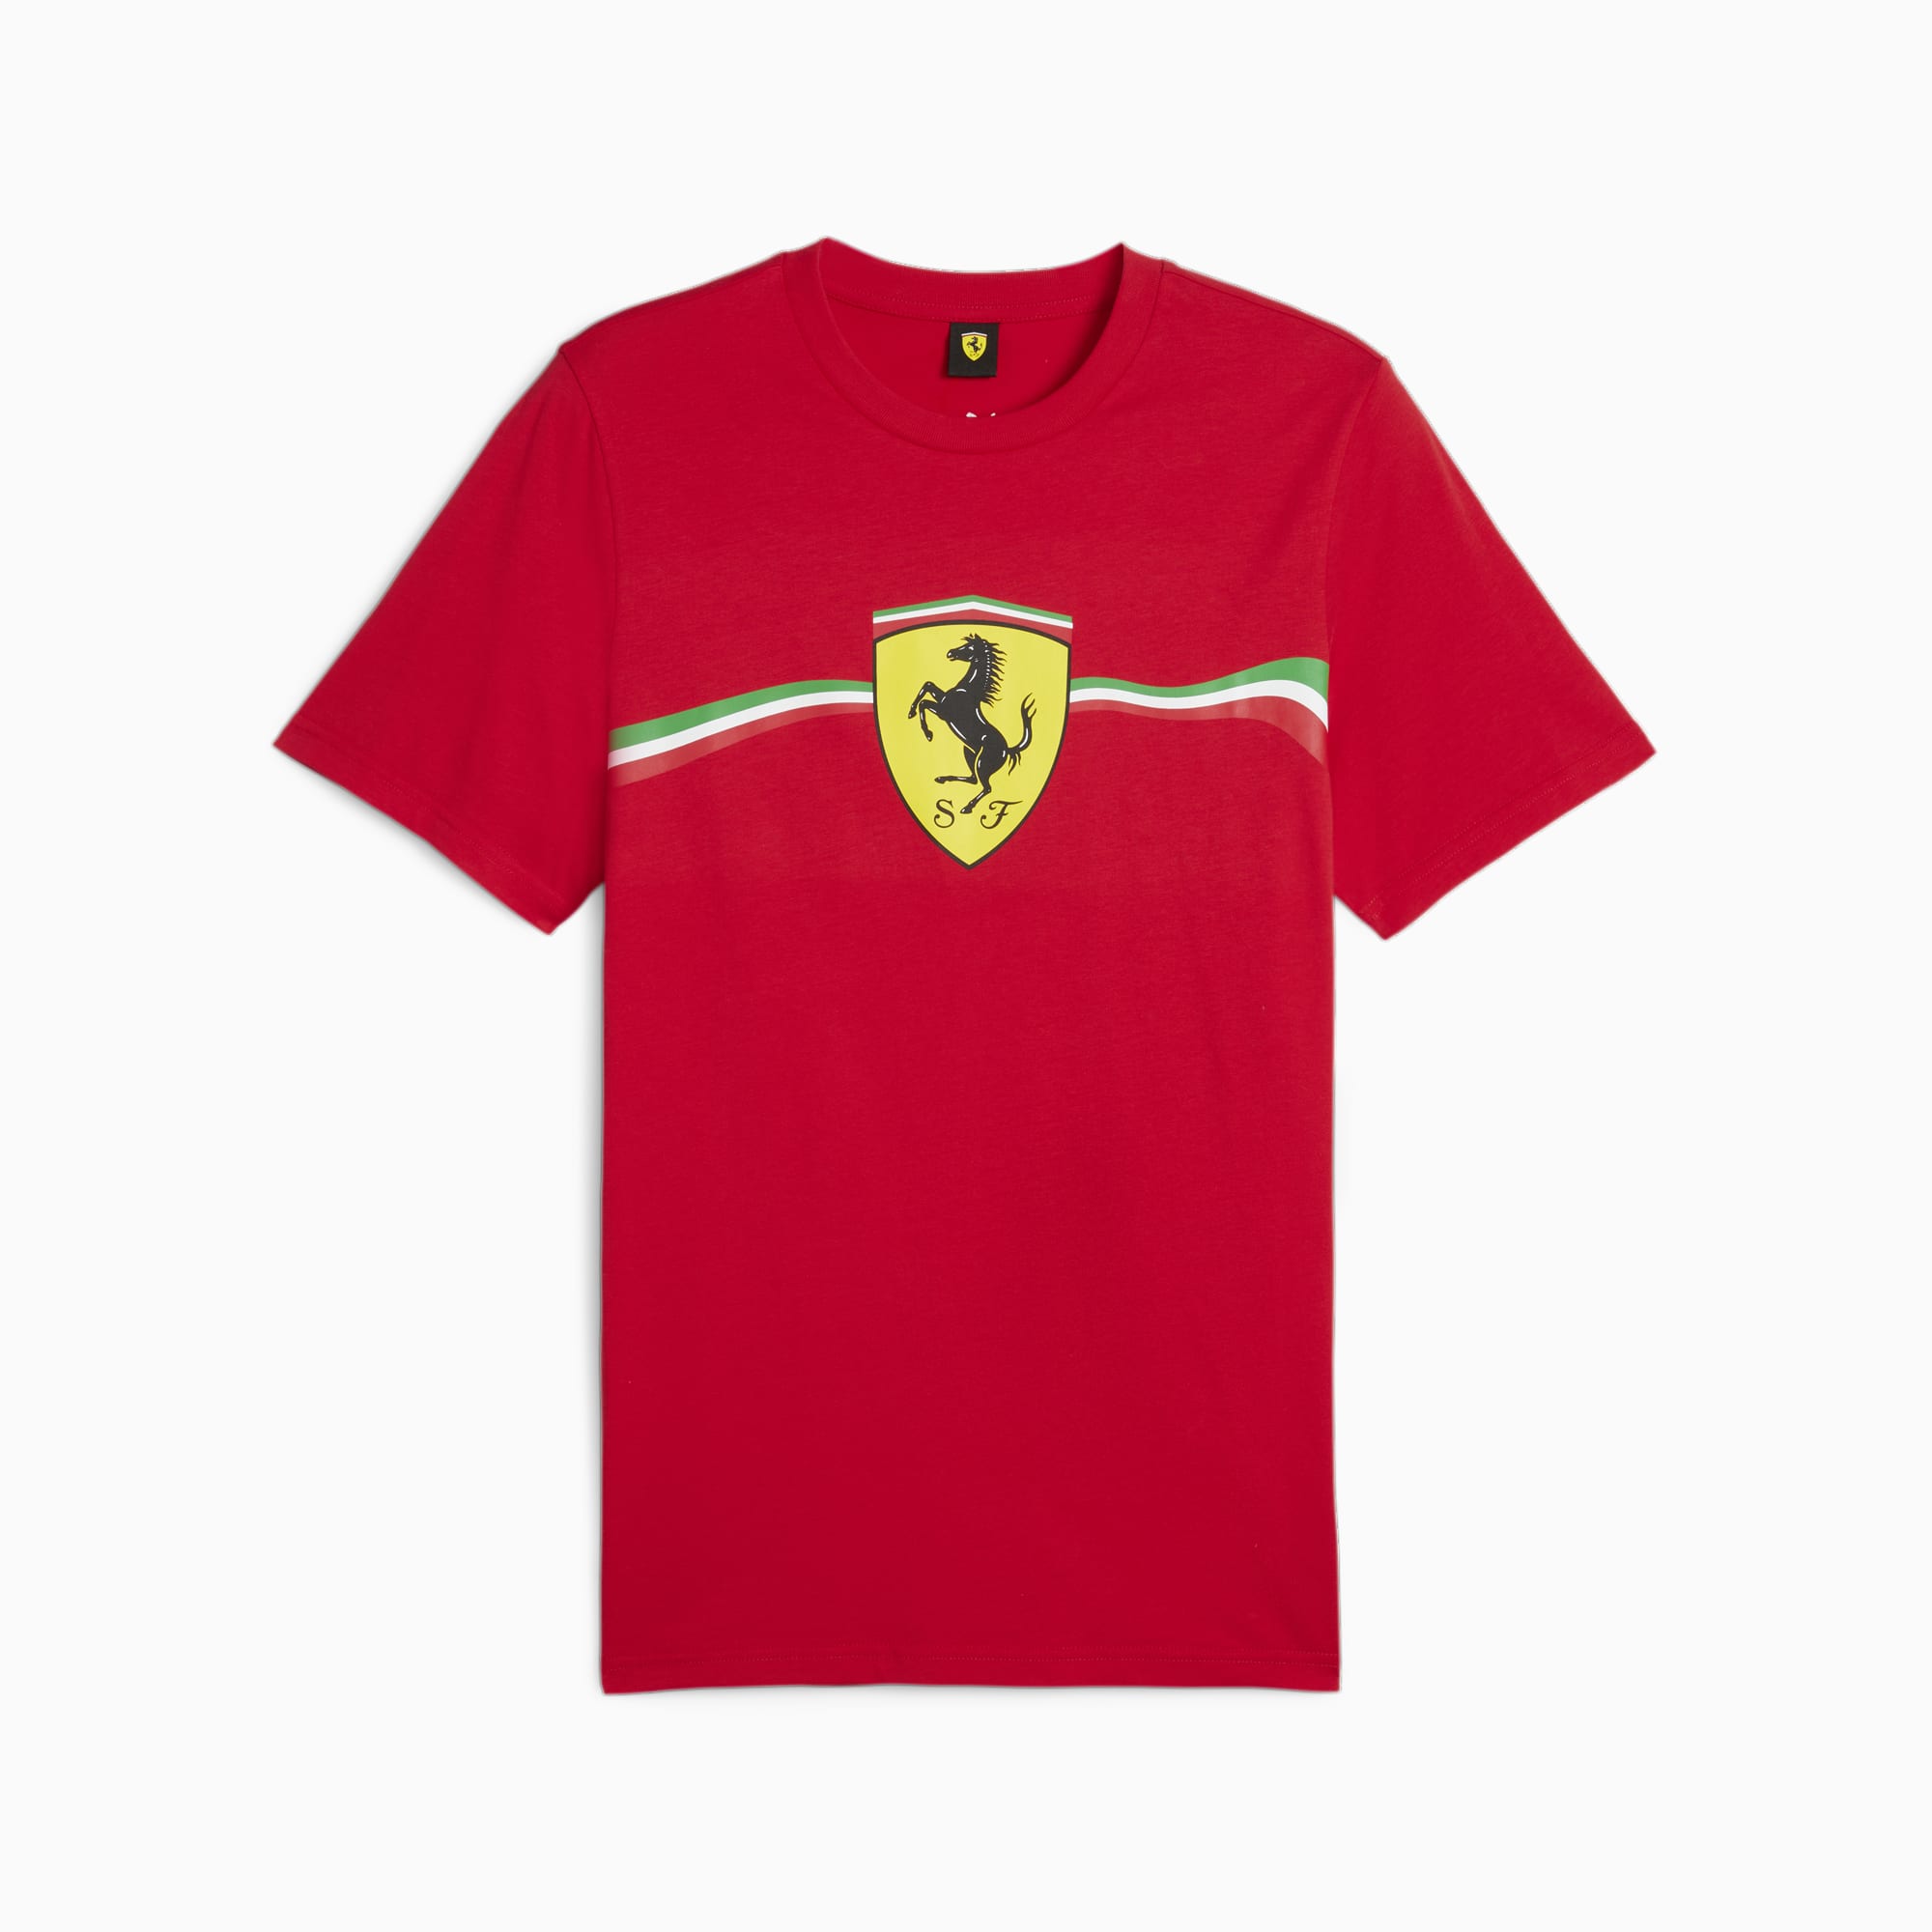 PUMA Scuderia Ferrari Race Big Shield Men's Motorsport Heritage T-Shirt, Red, Size XS, Clothing